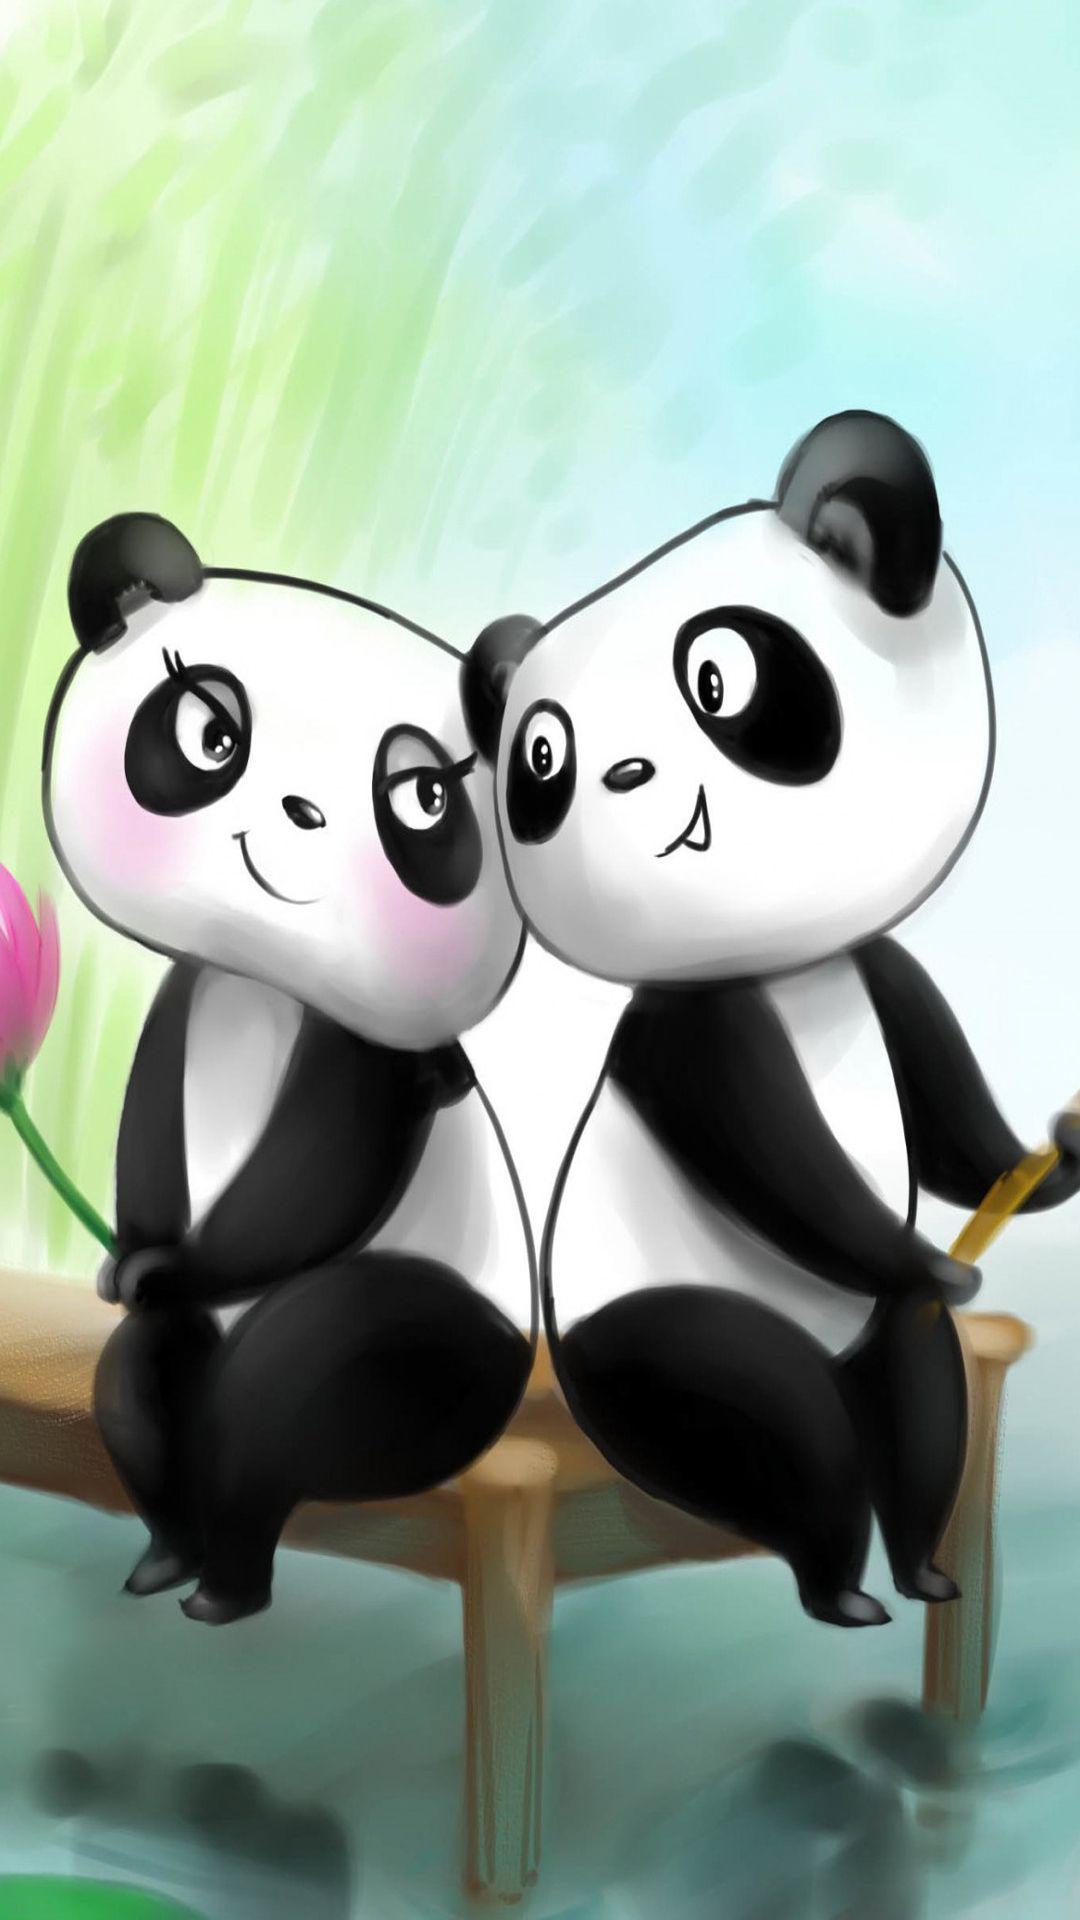 Wallpapers Panda Couple - Wallpaper Cave